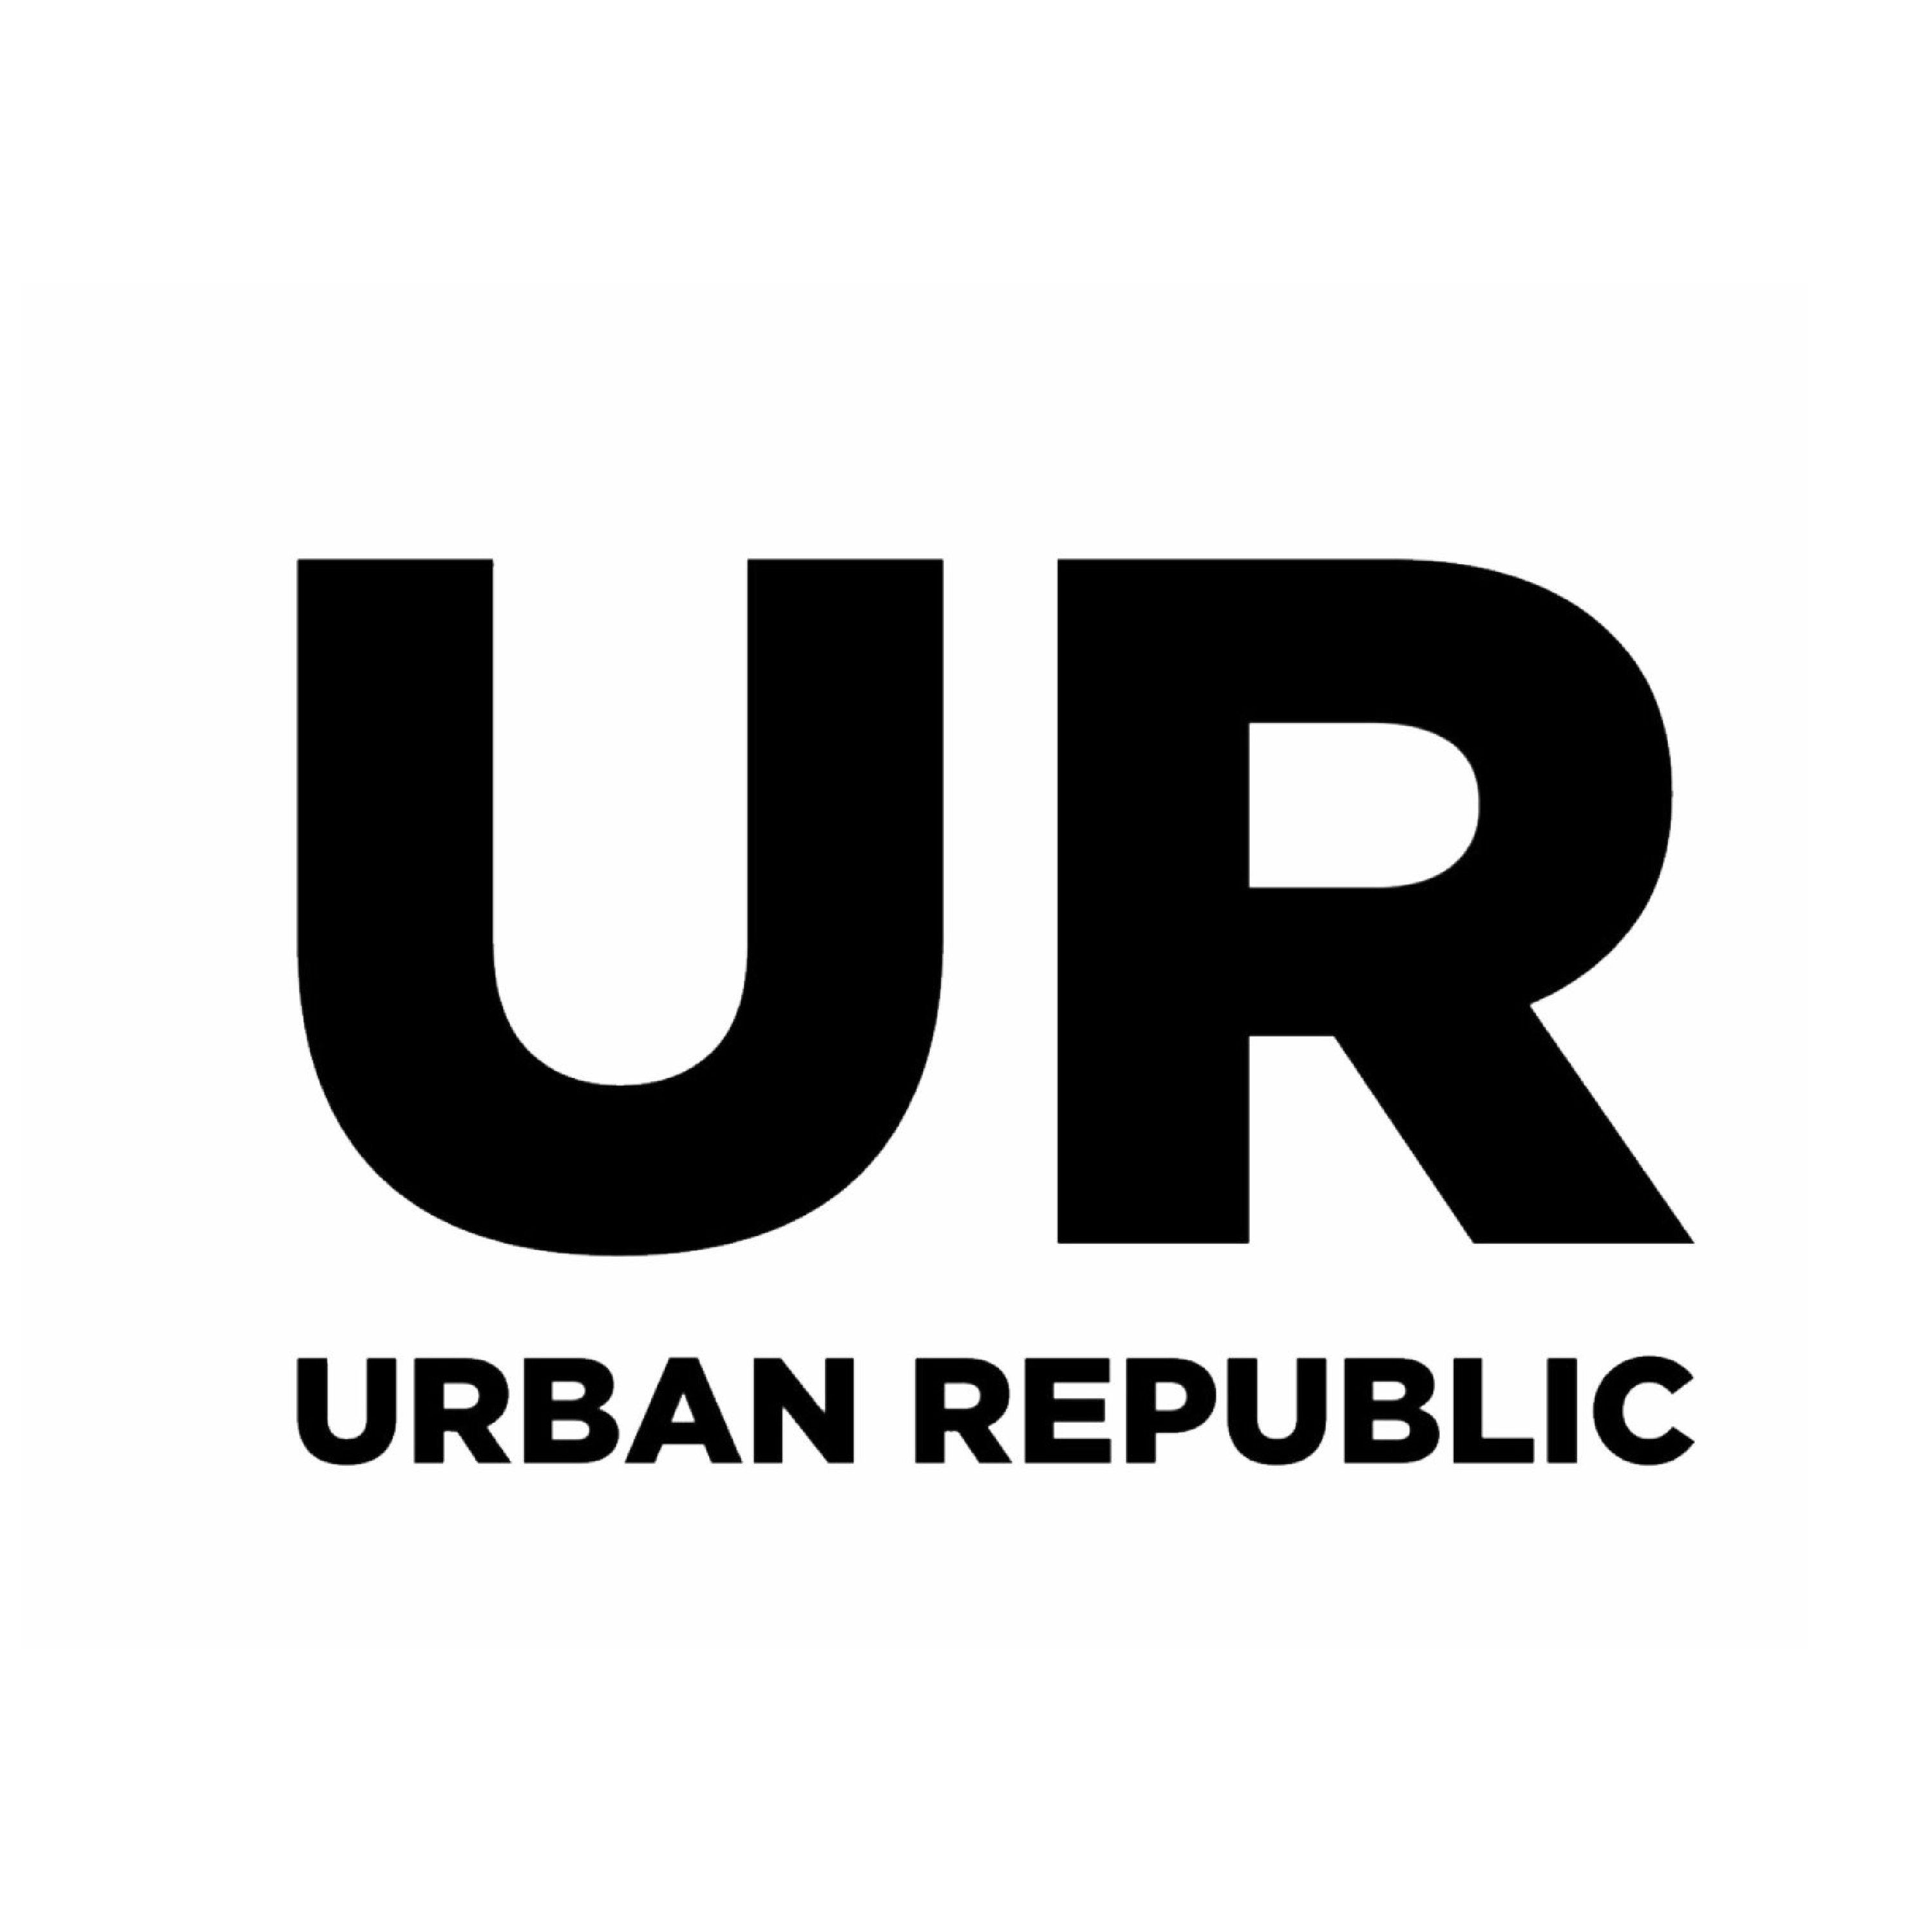 URBAN REPUBLIC